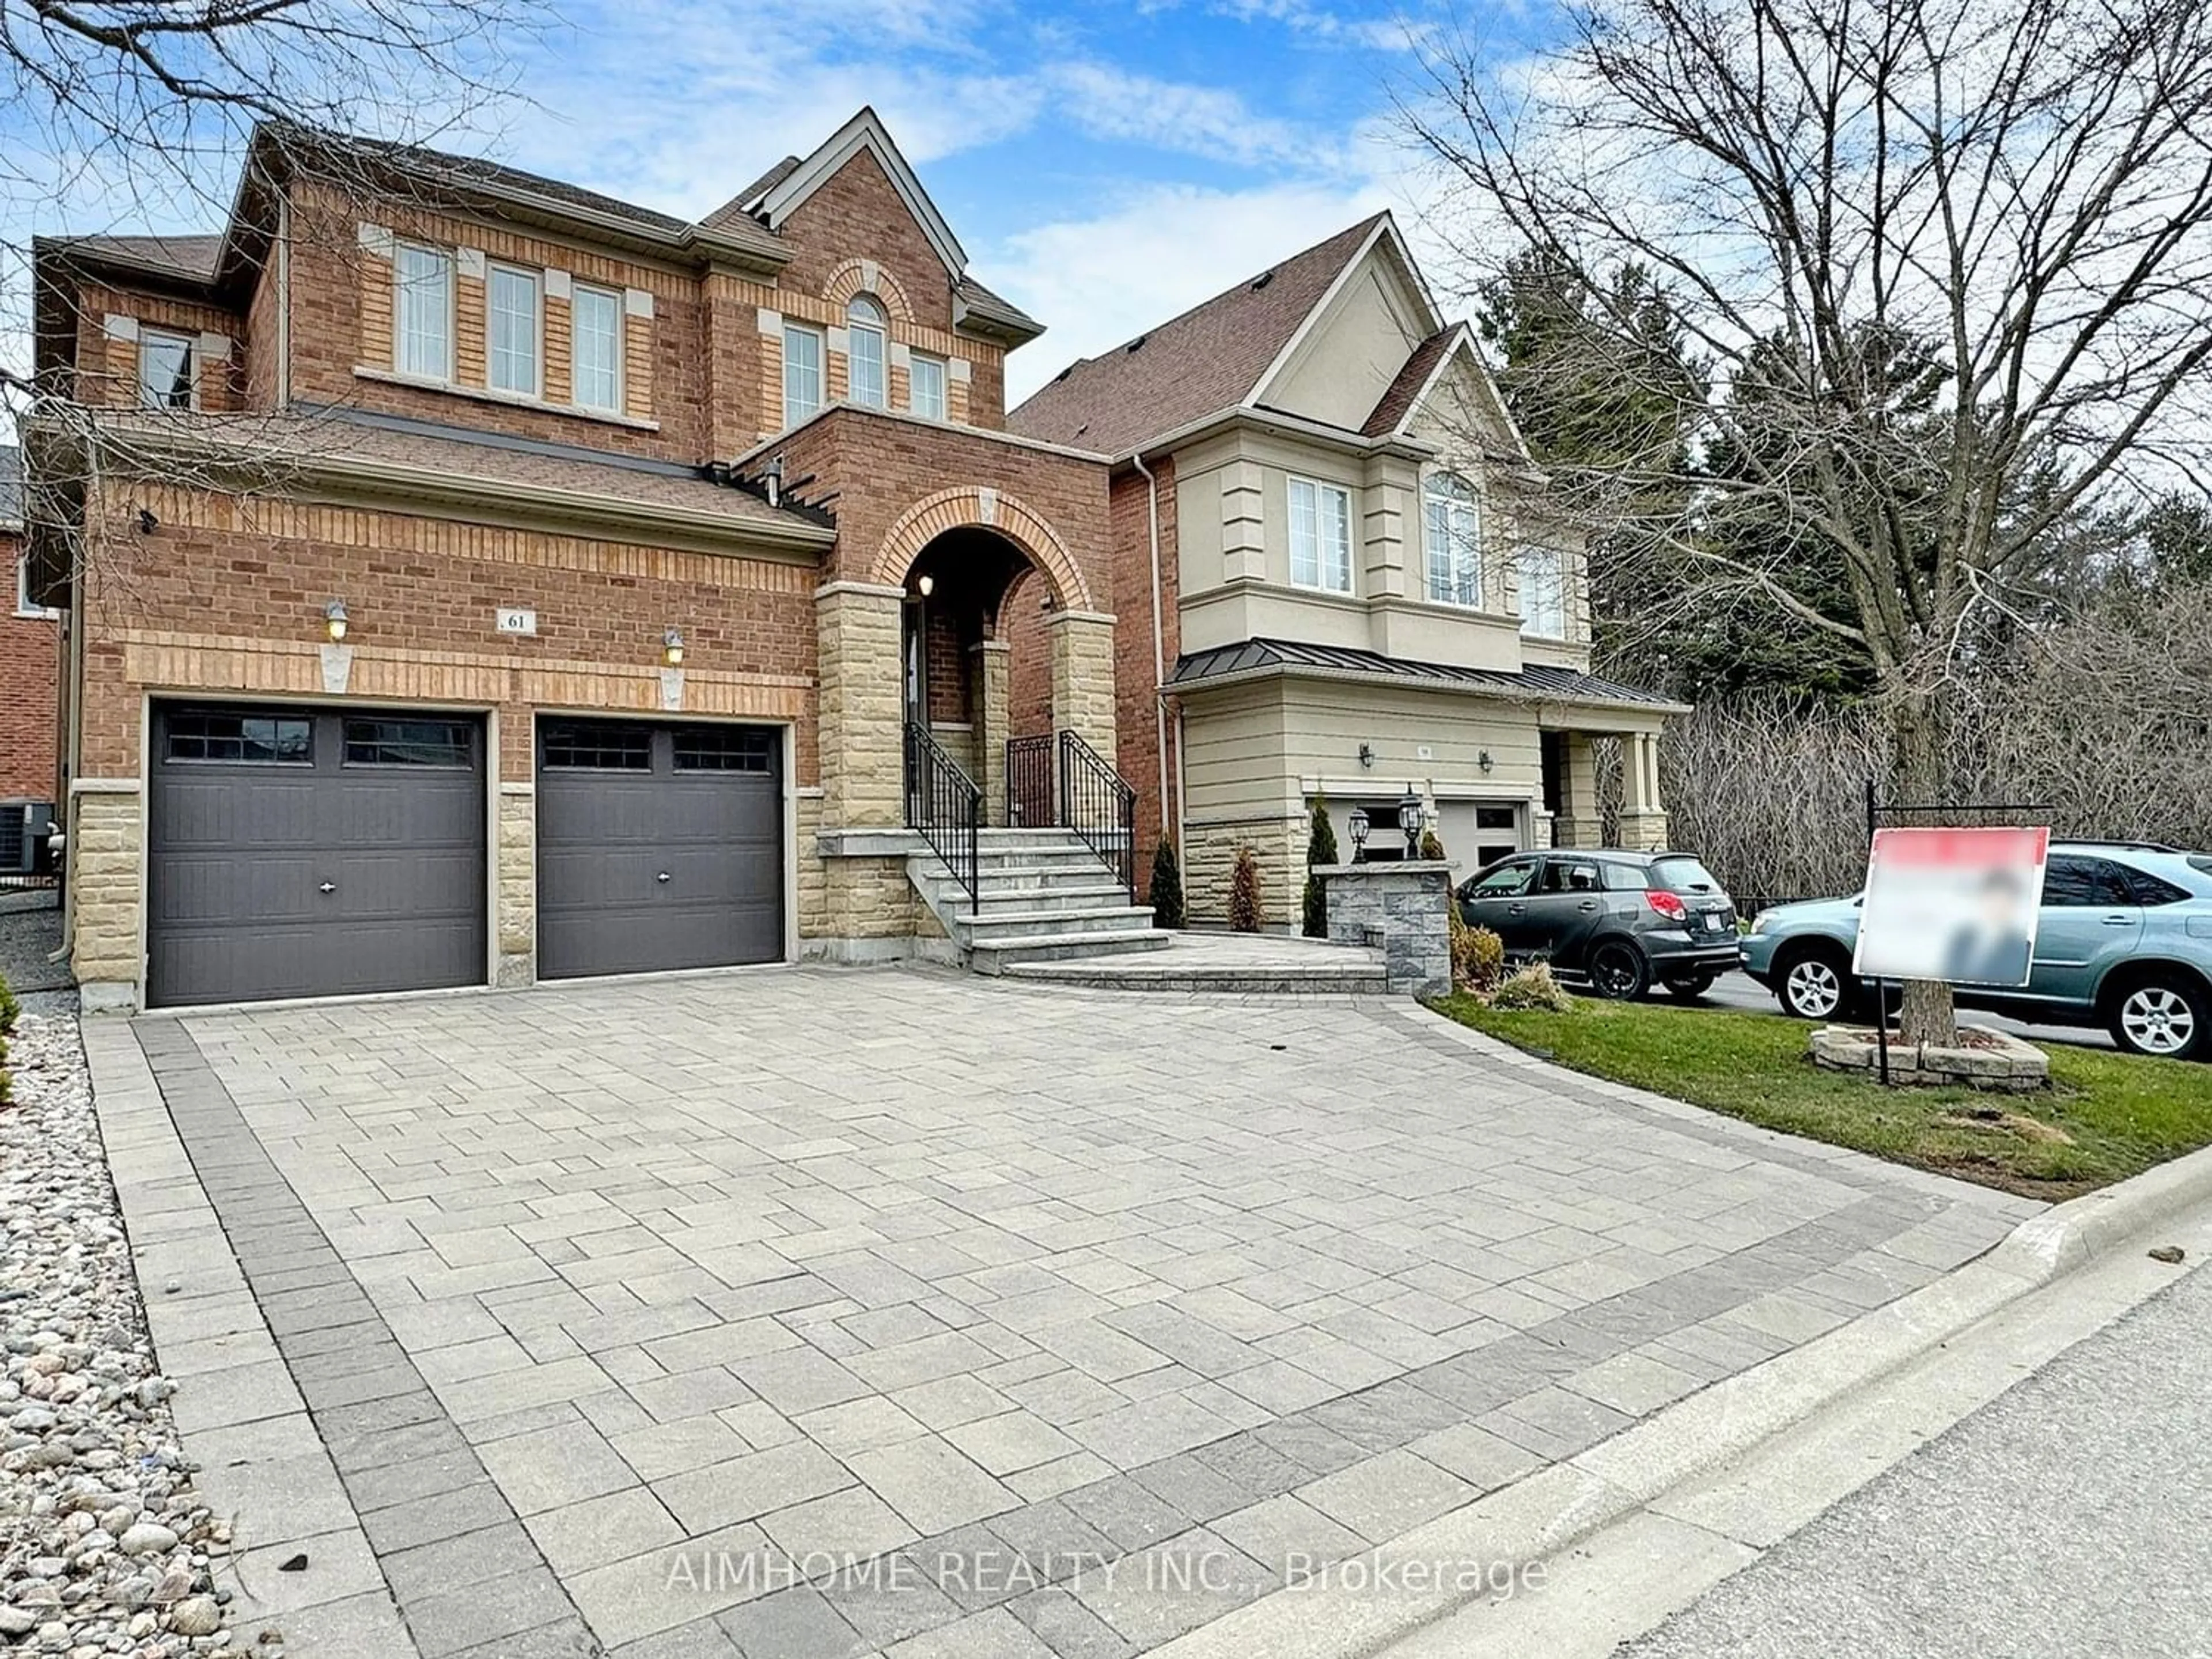 Home with brick exterior material for 61 Bush Ridges Ave, Richmond Hill Ontario L4E 0P1